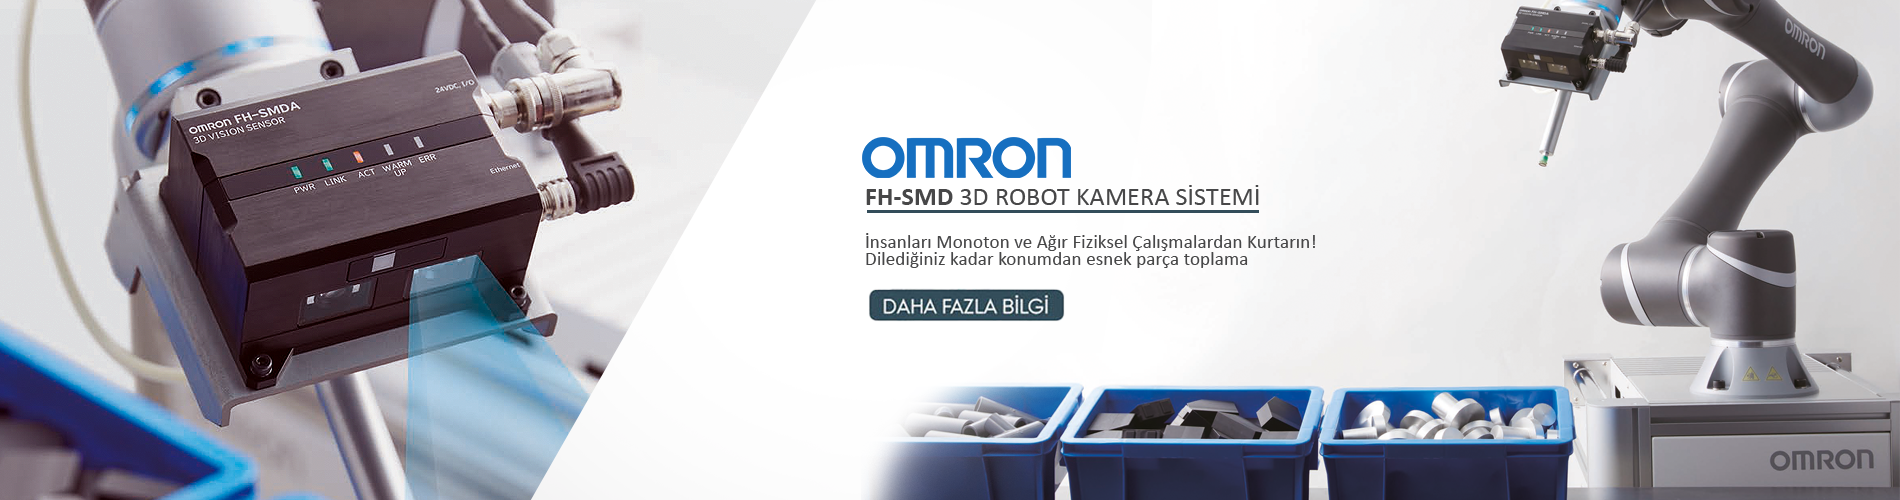 Omron-FH-SMD-3D-Robot-Kamera-Sistemi